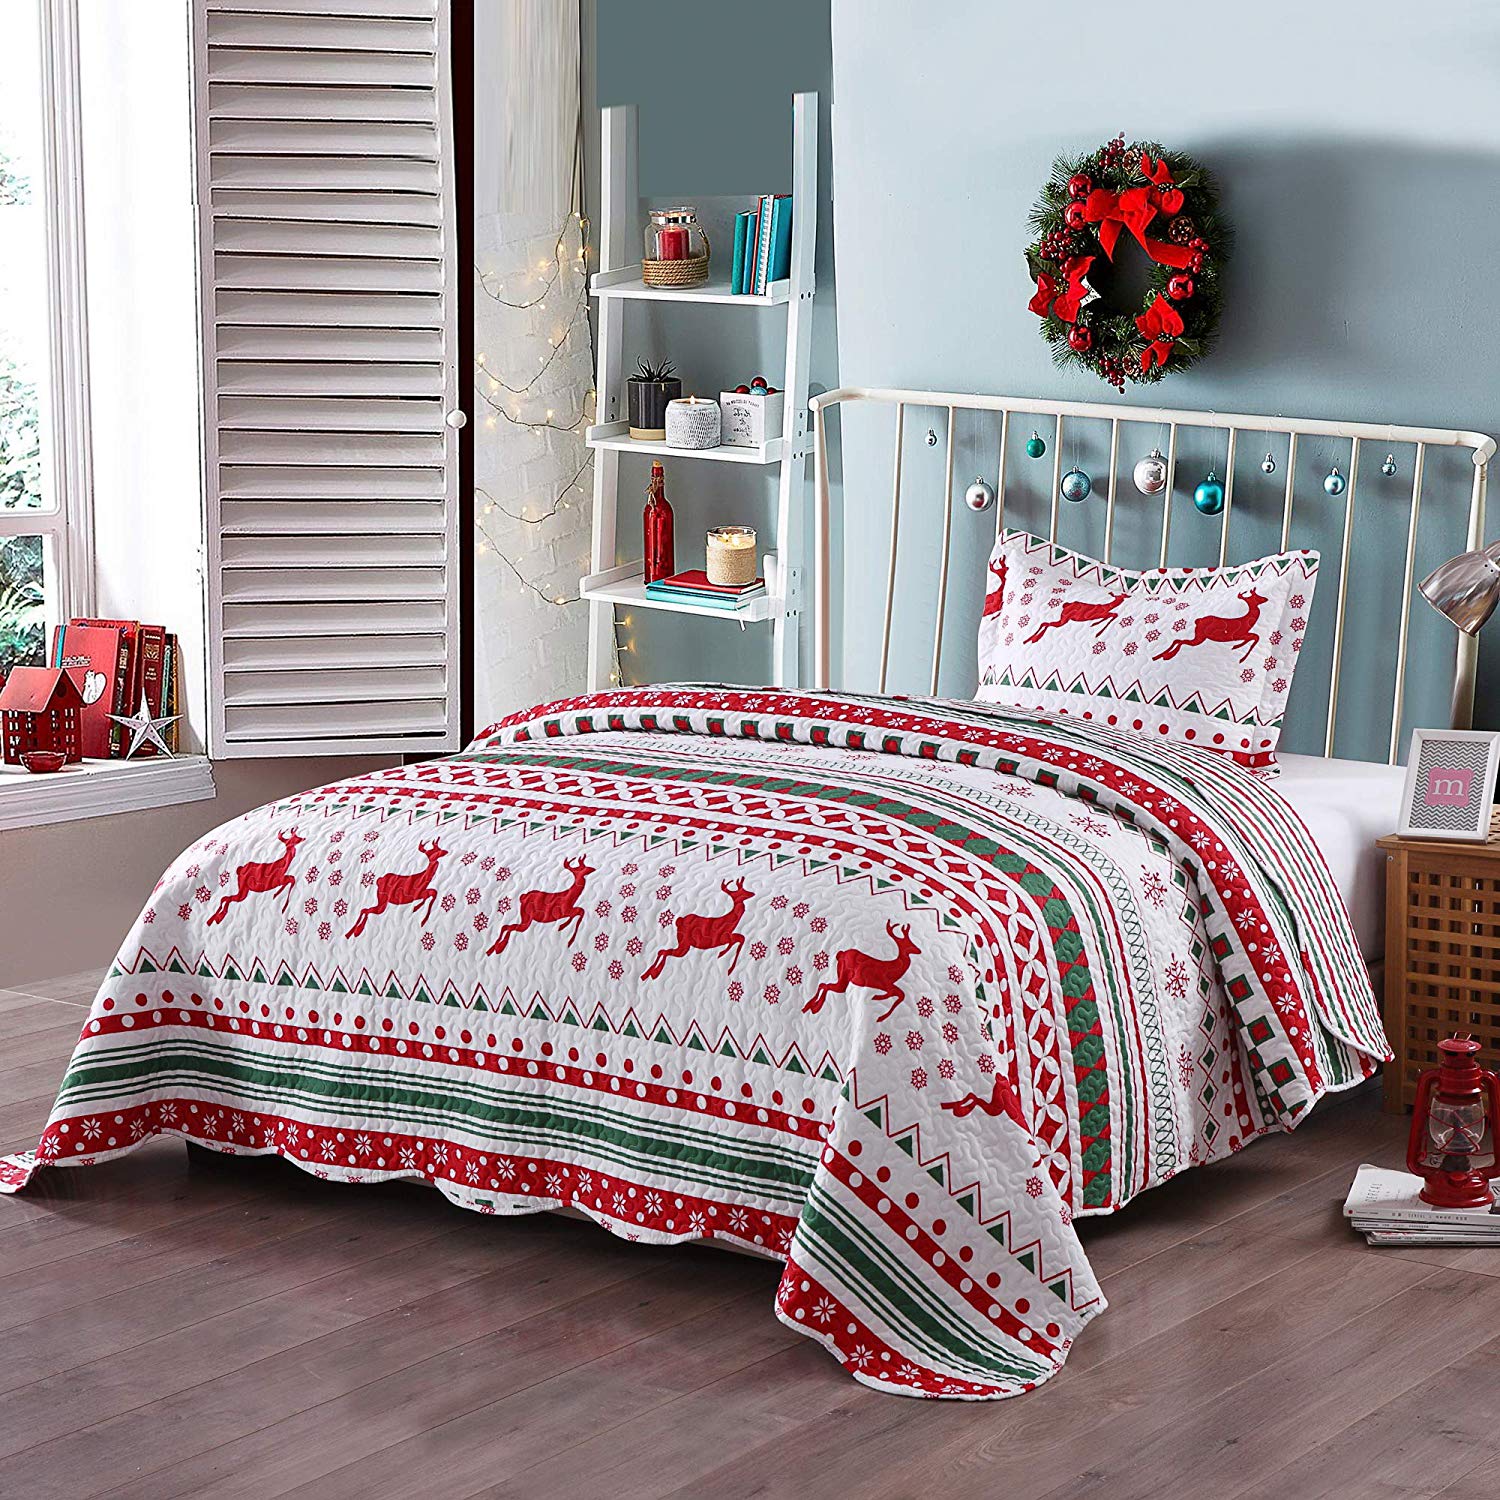 2/3 Pcs Christmas Quilt Set Bedspread Throw Blanket Snowflake